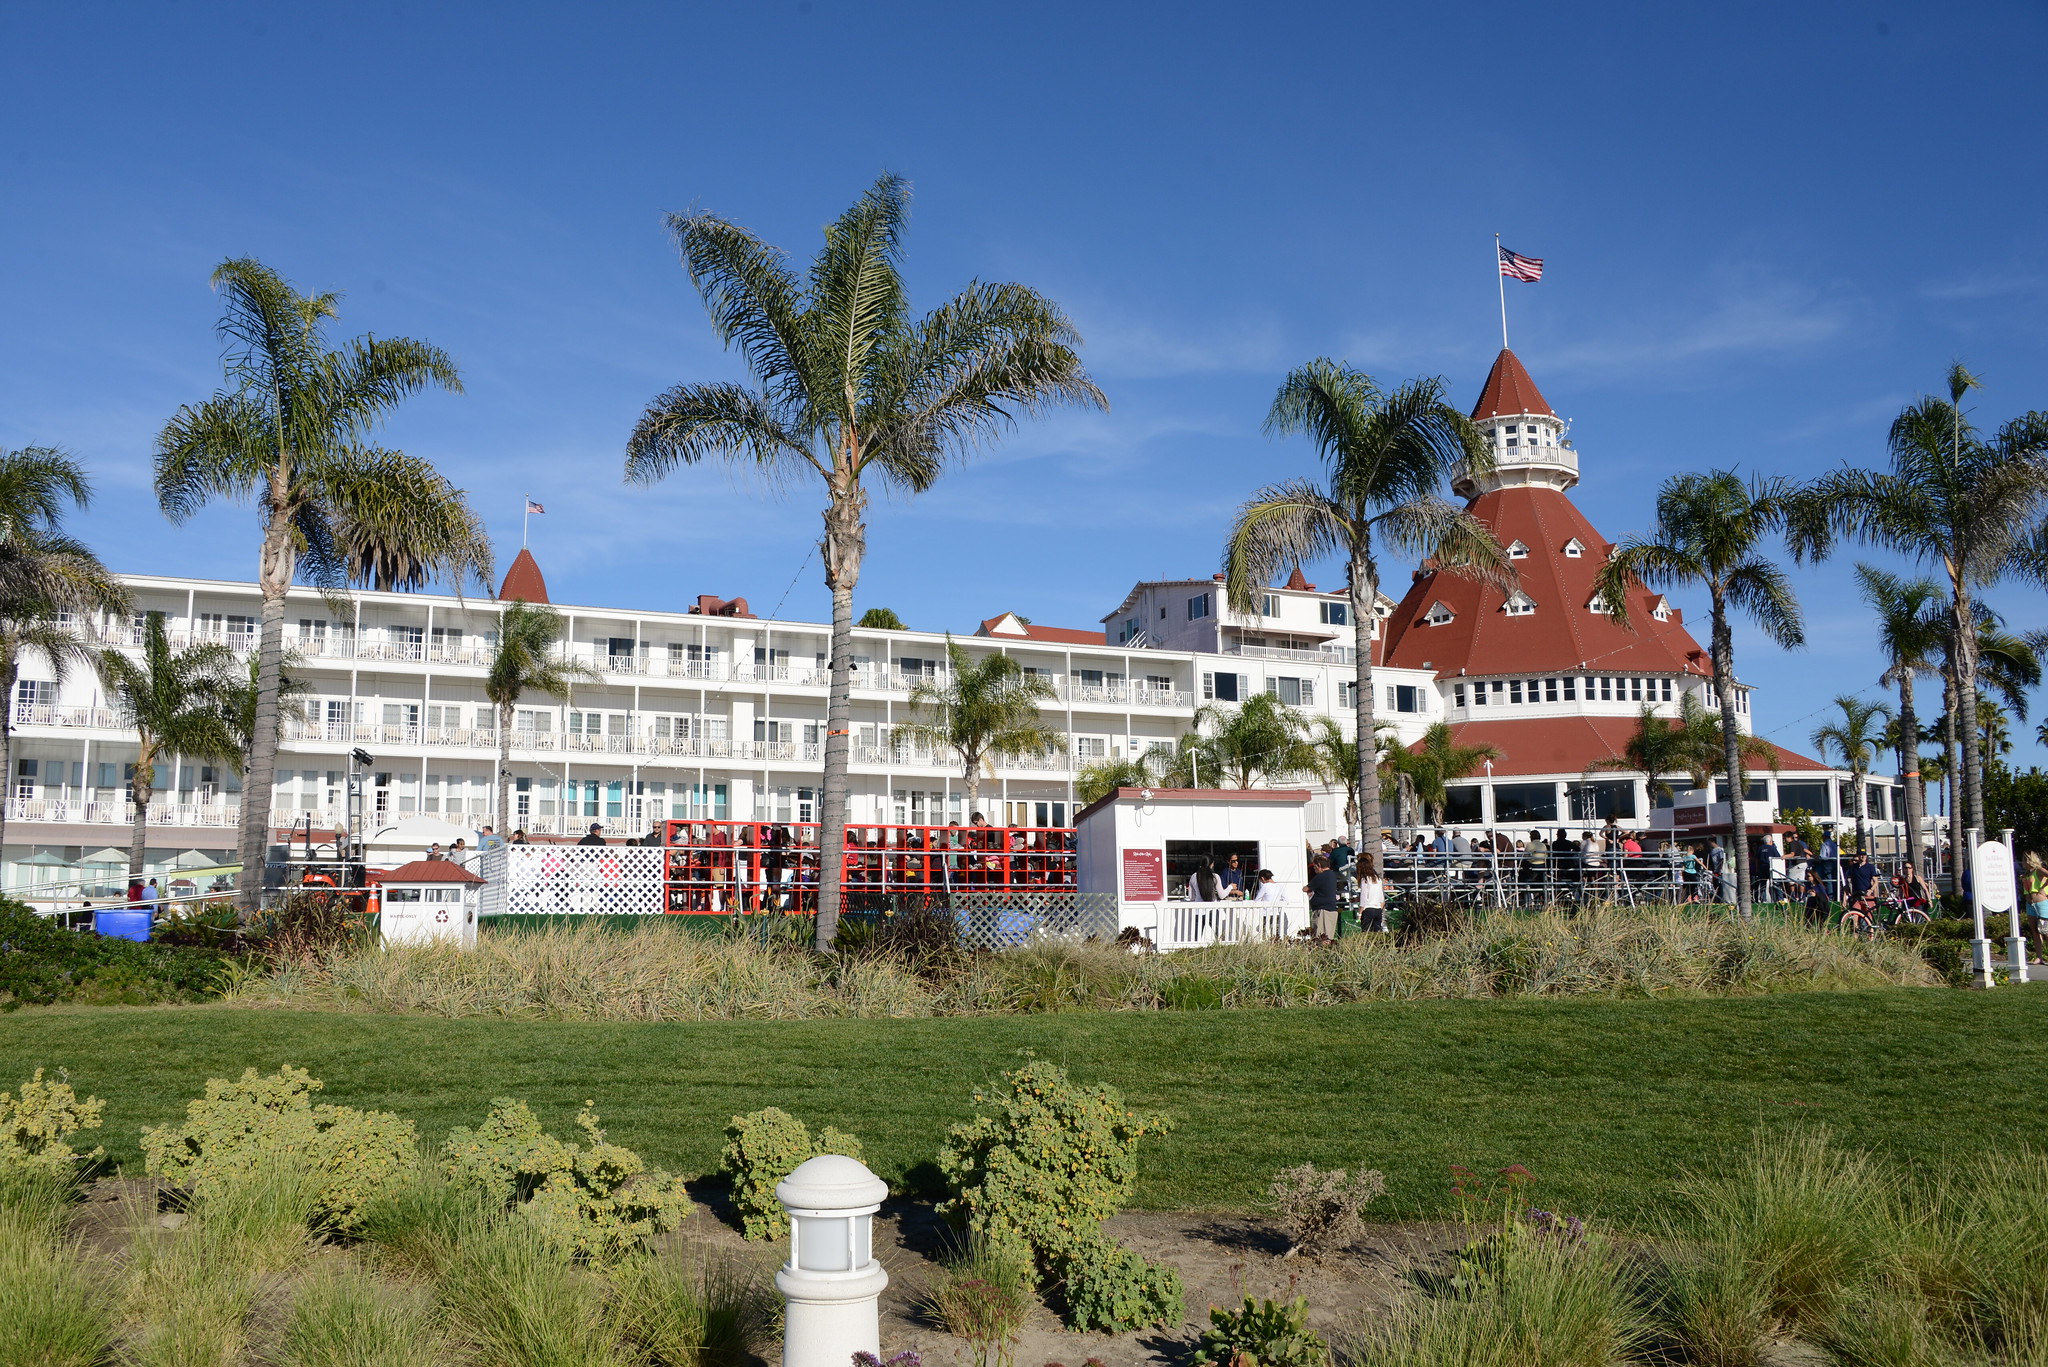 Hotel Coronado in San Diego